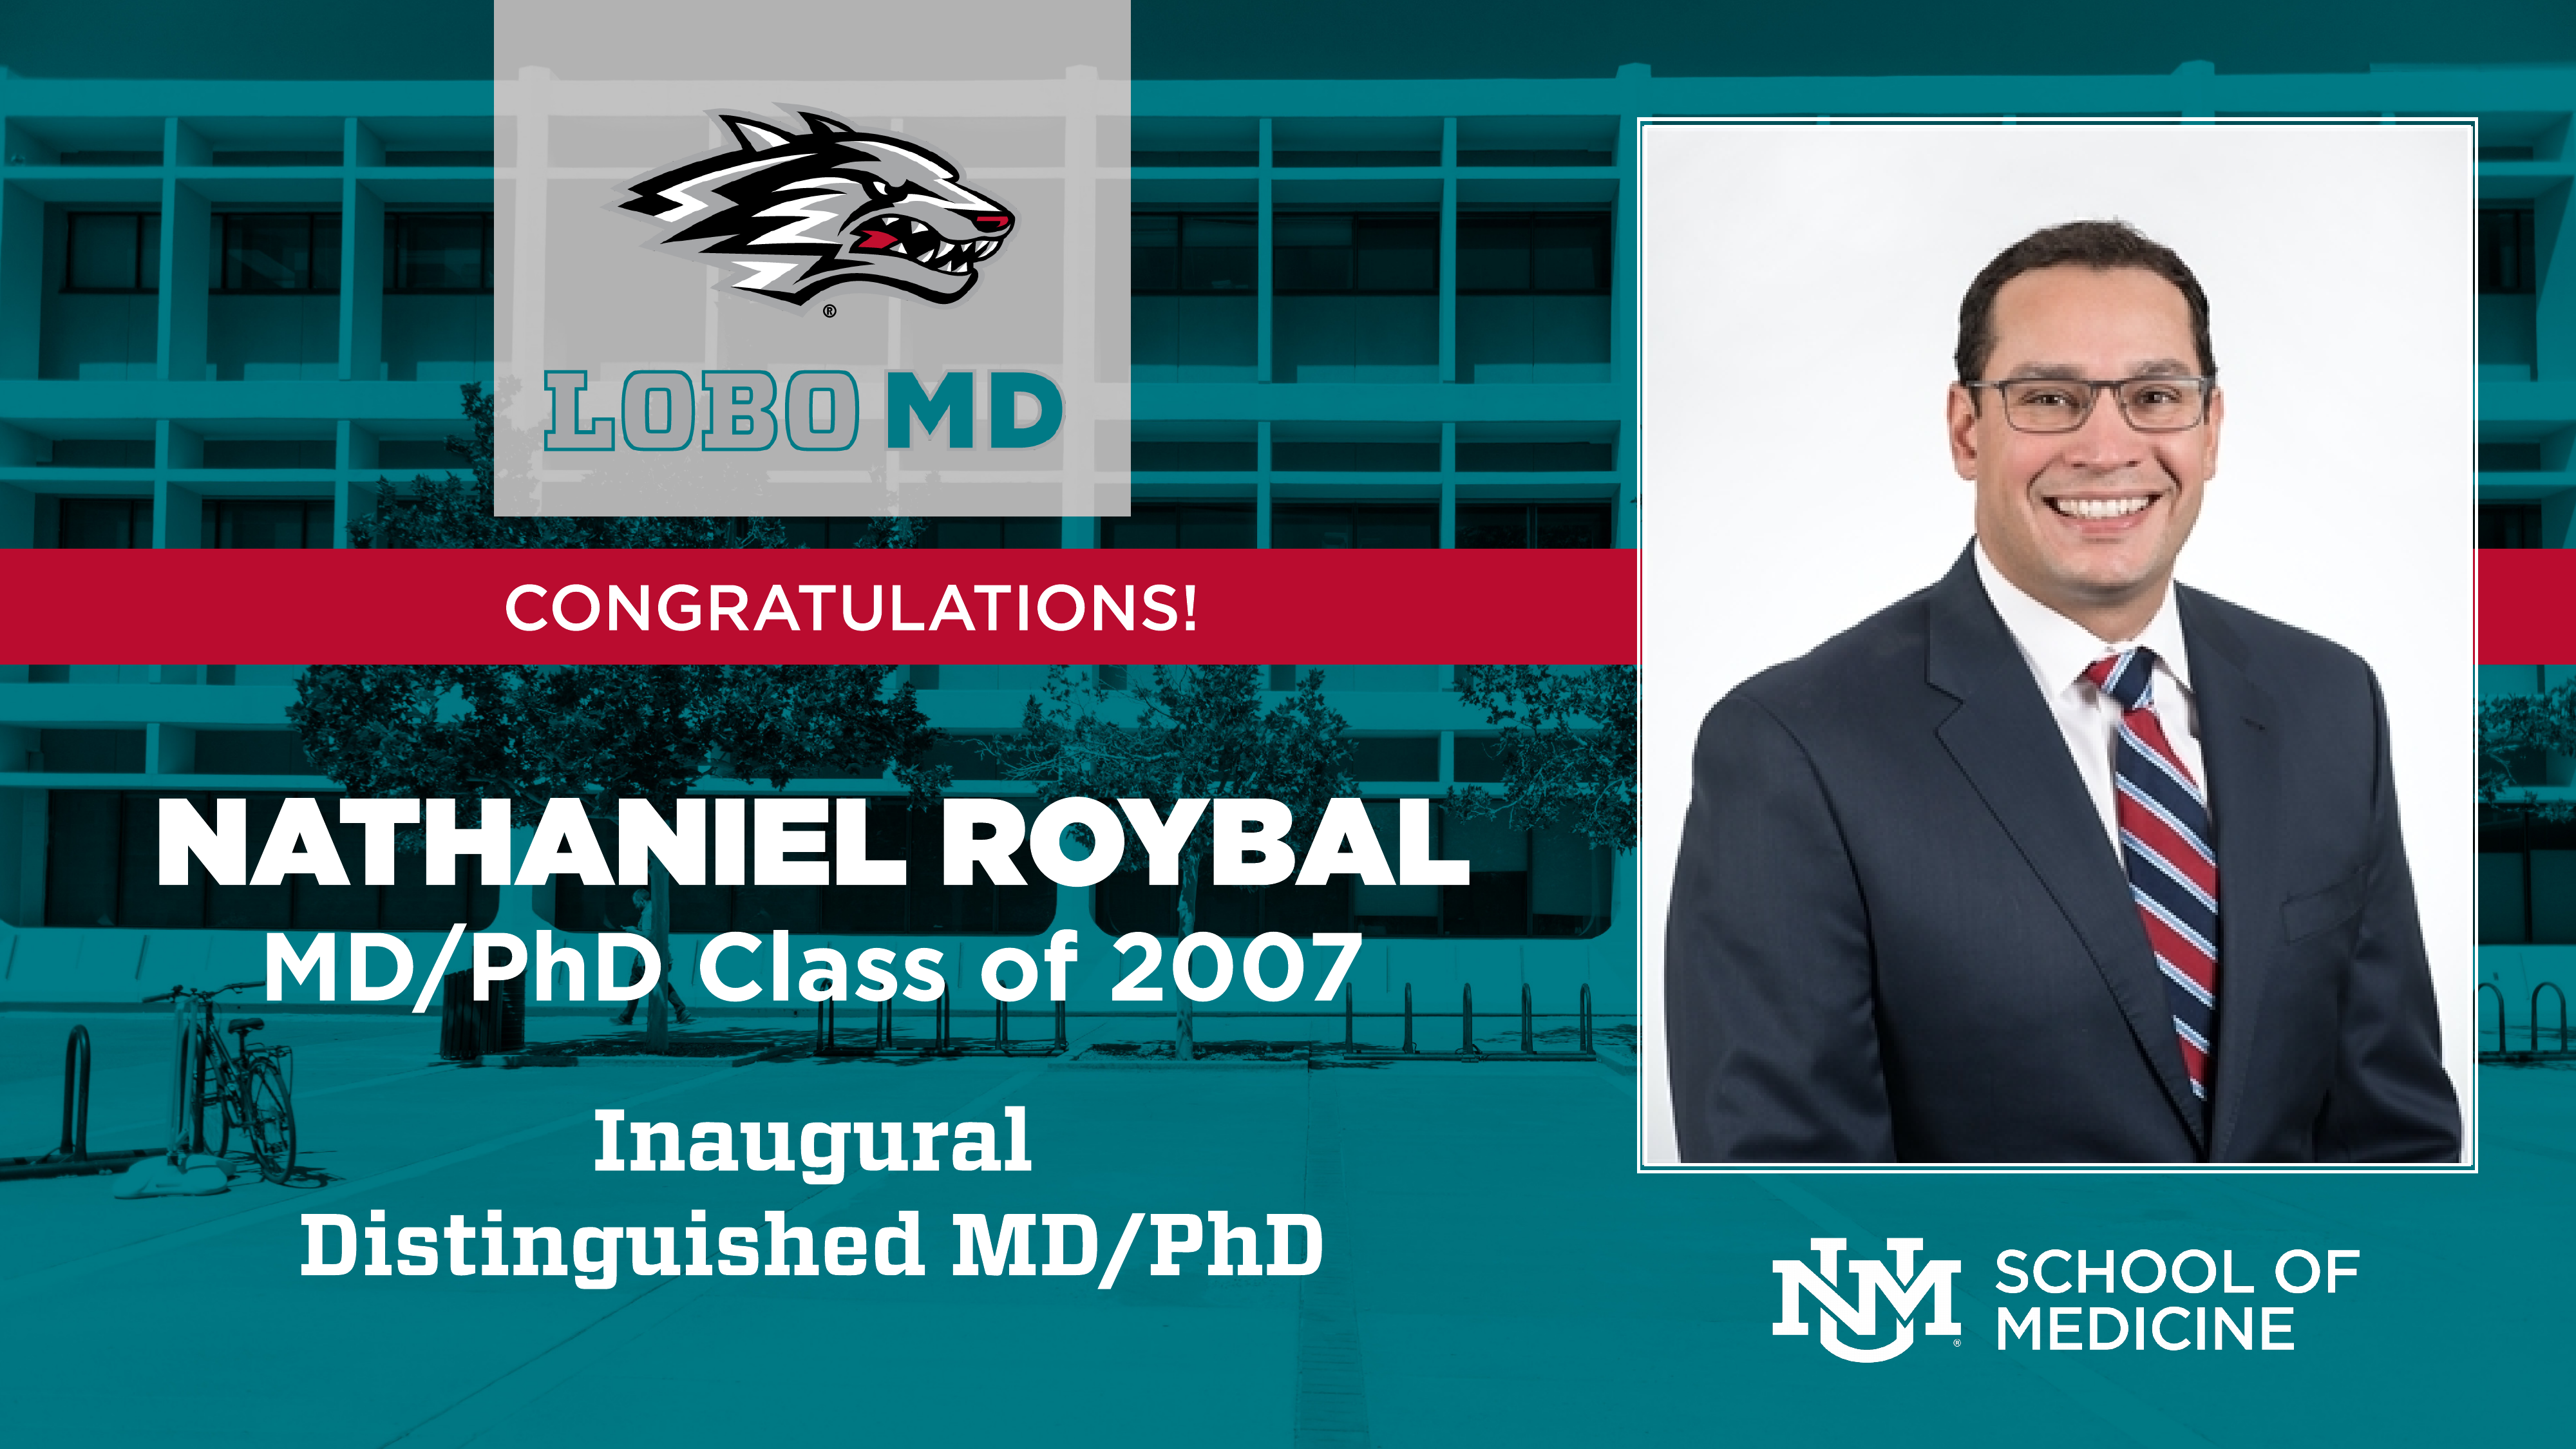 Dr. Nathaniel Roybal